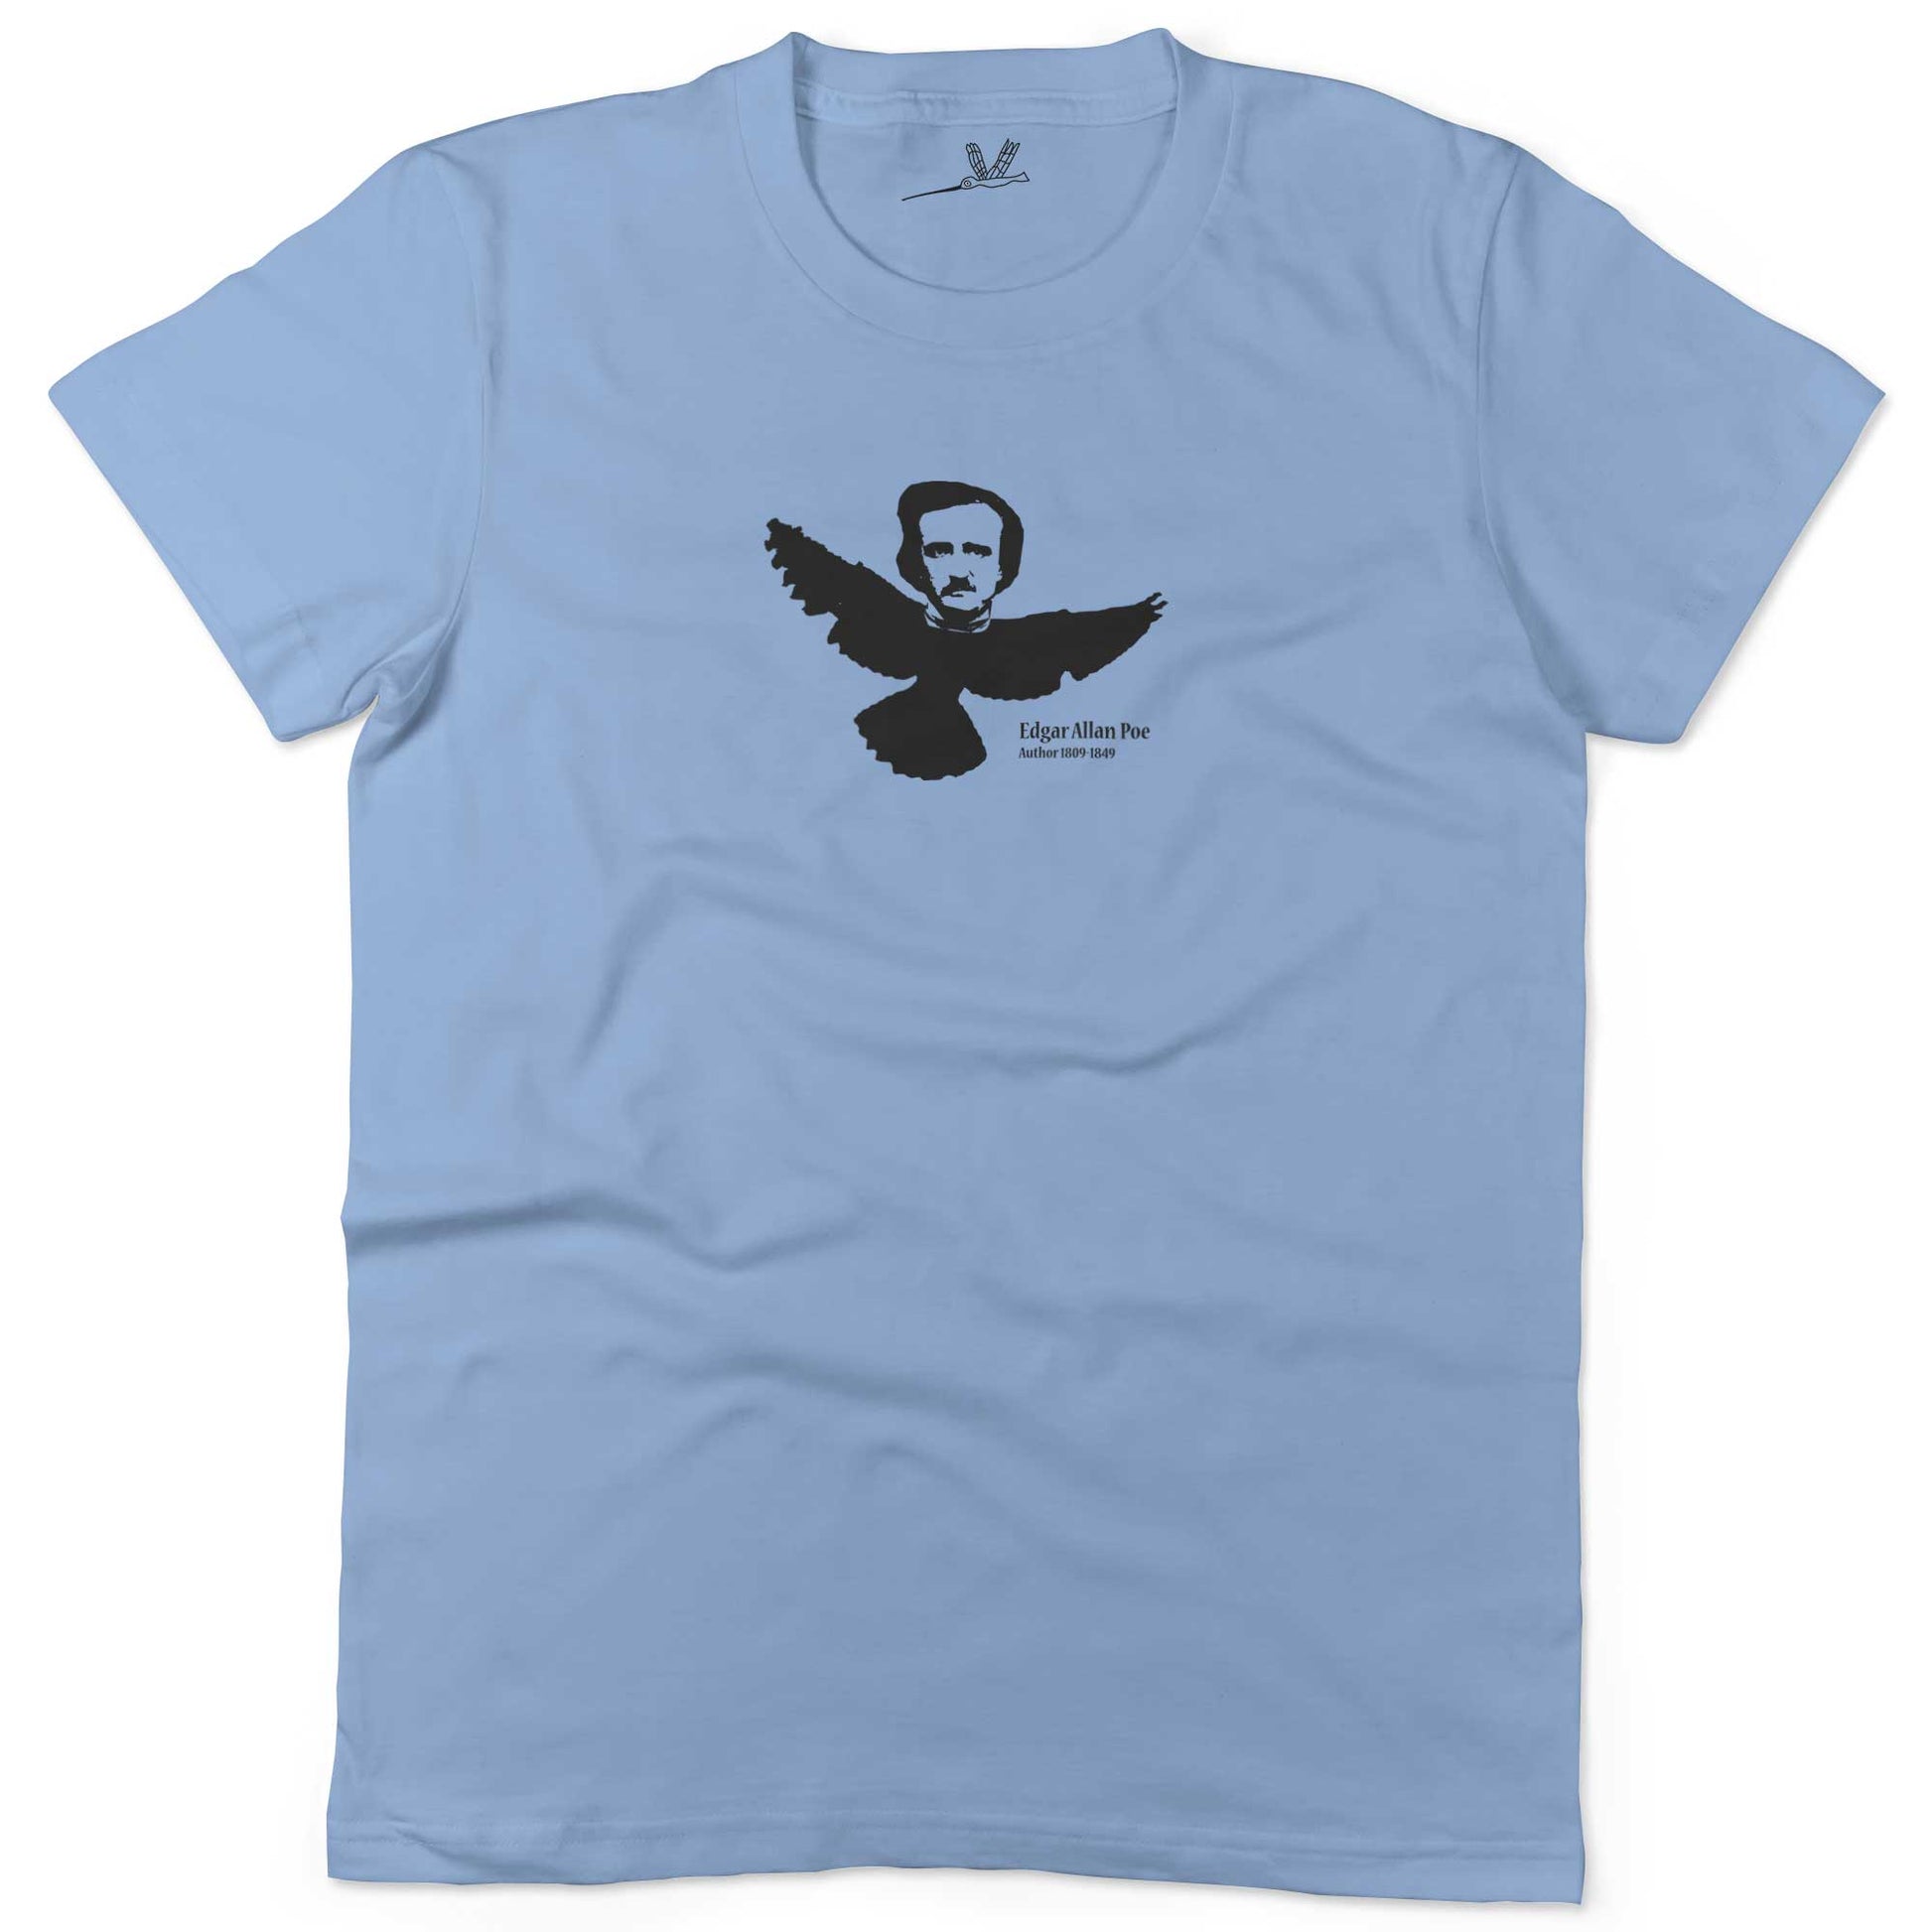 Edgar Allan Poe Unisex Or Women's Cotton T-shirt-Baby Blue-Woman